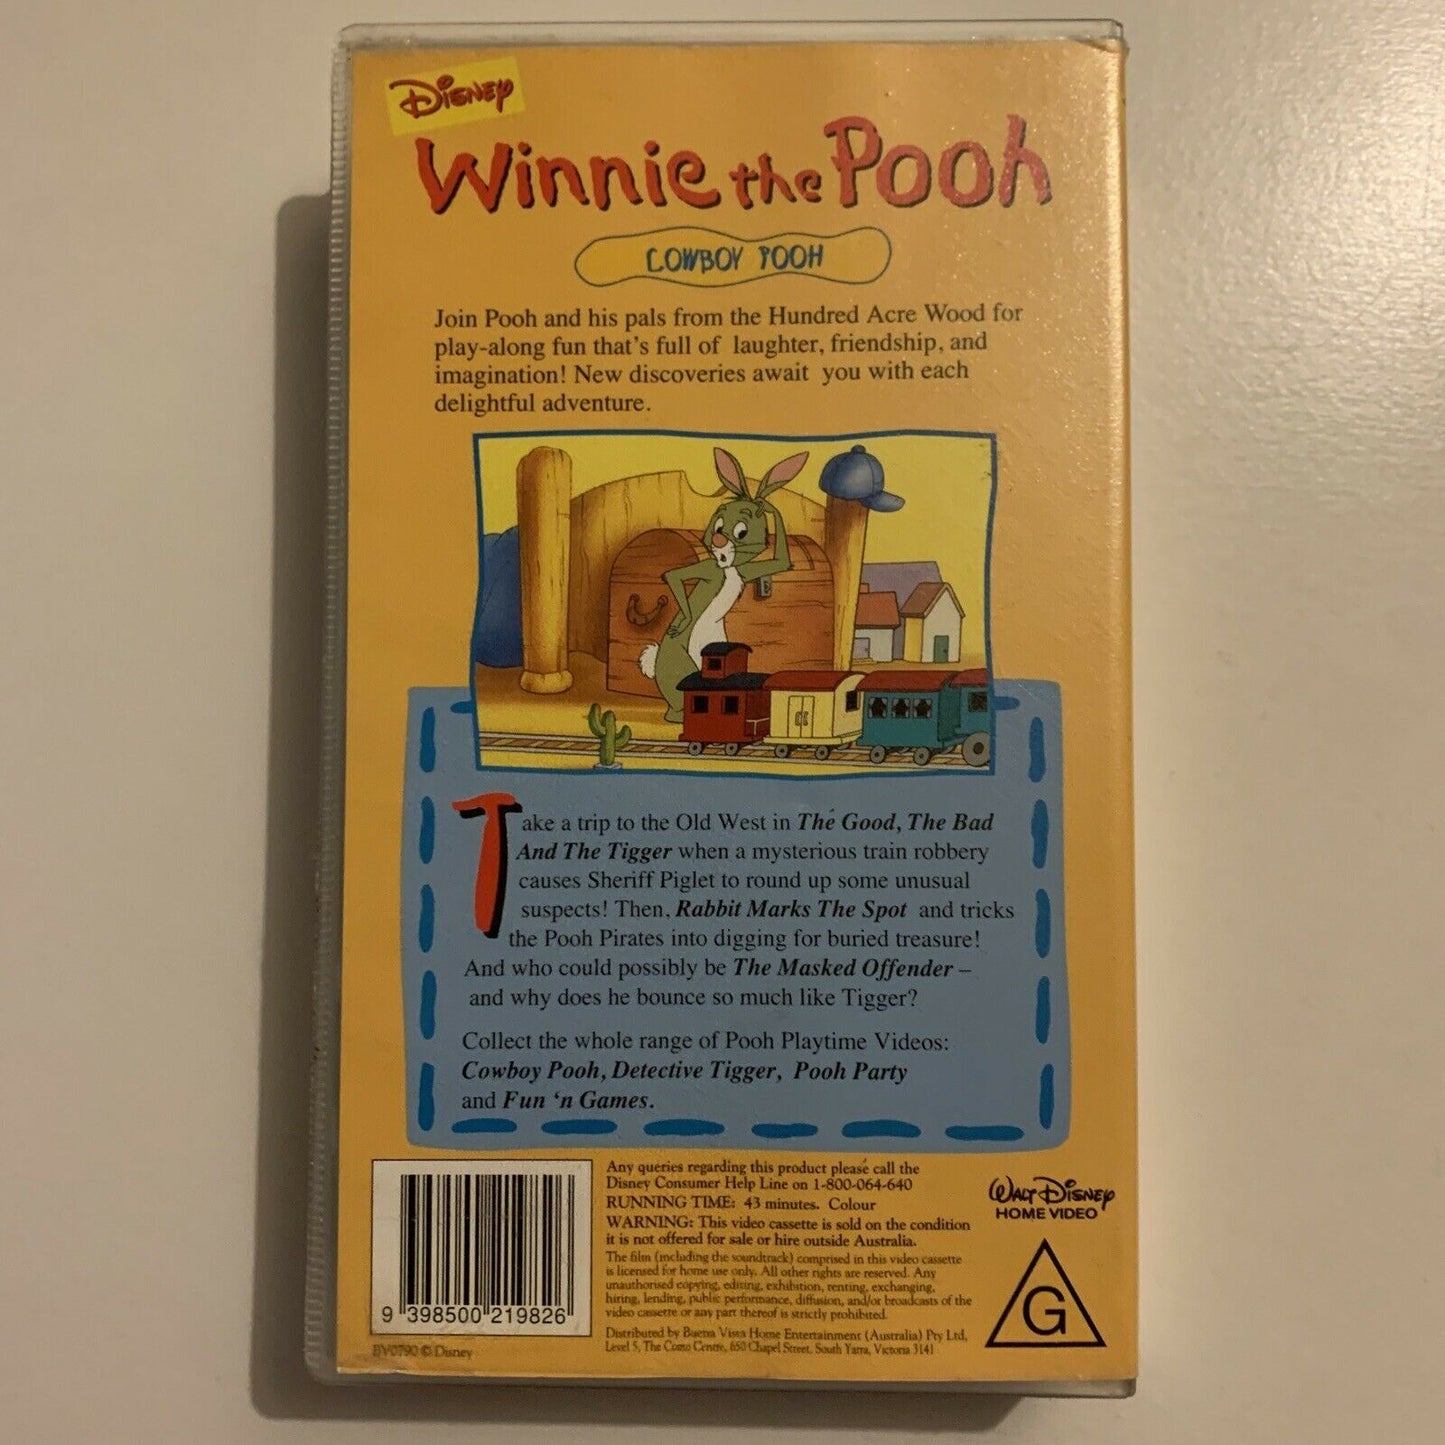 Winnie The Pooh - Cowboy Pooh (VHS, 1994) PAL